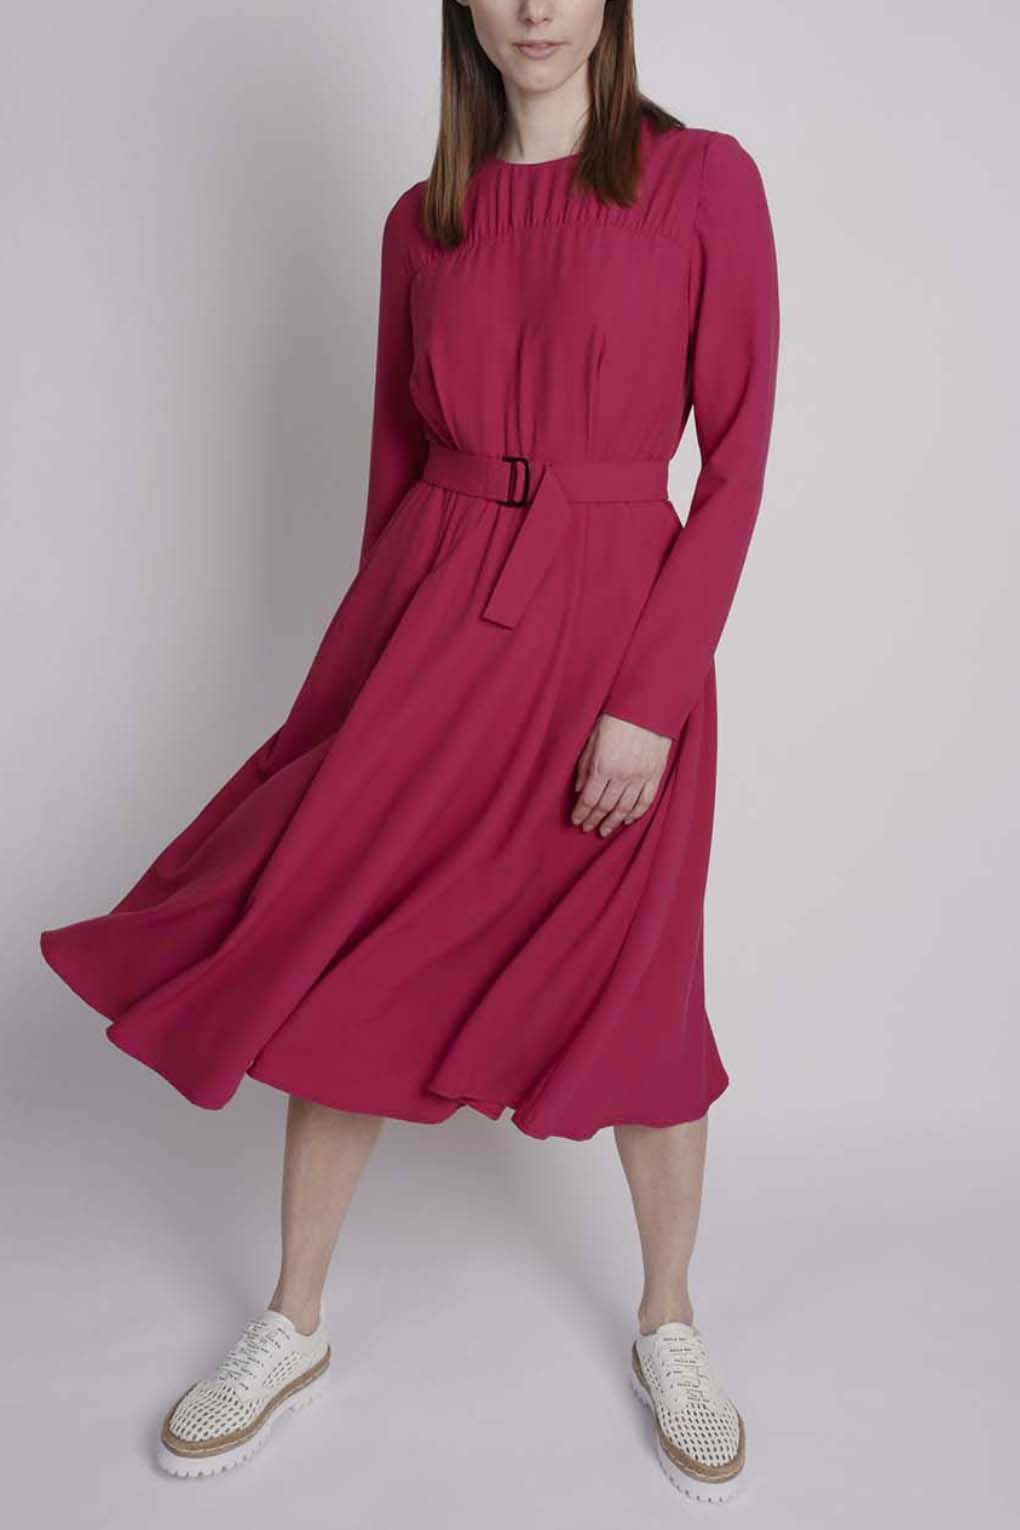 Платье женское PAOLA RAY PR219-3061 красное M